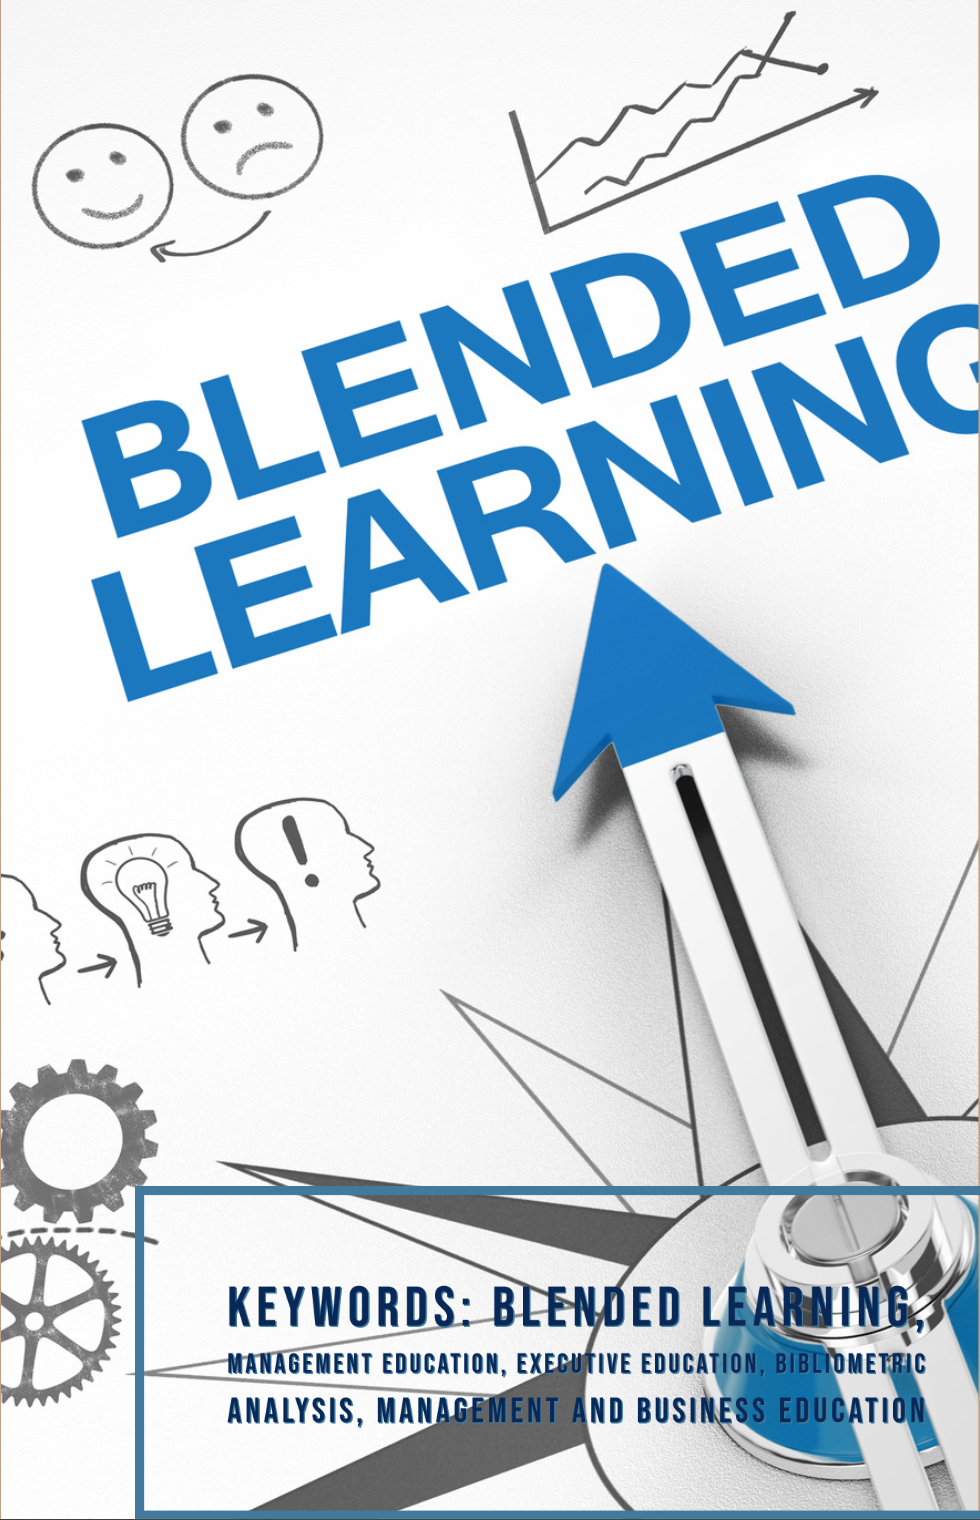 	Blended learning, Management education, Executive education, Bibliometric analysis, Management and Business Education 